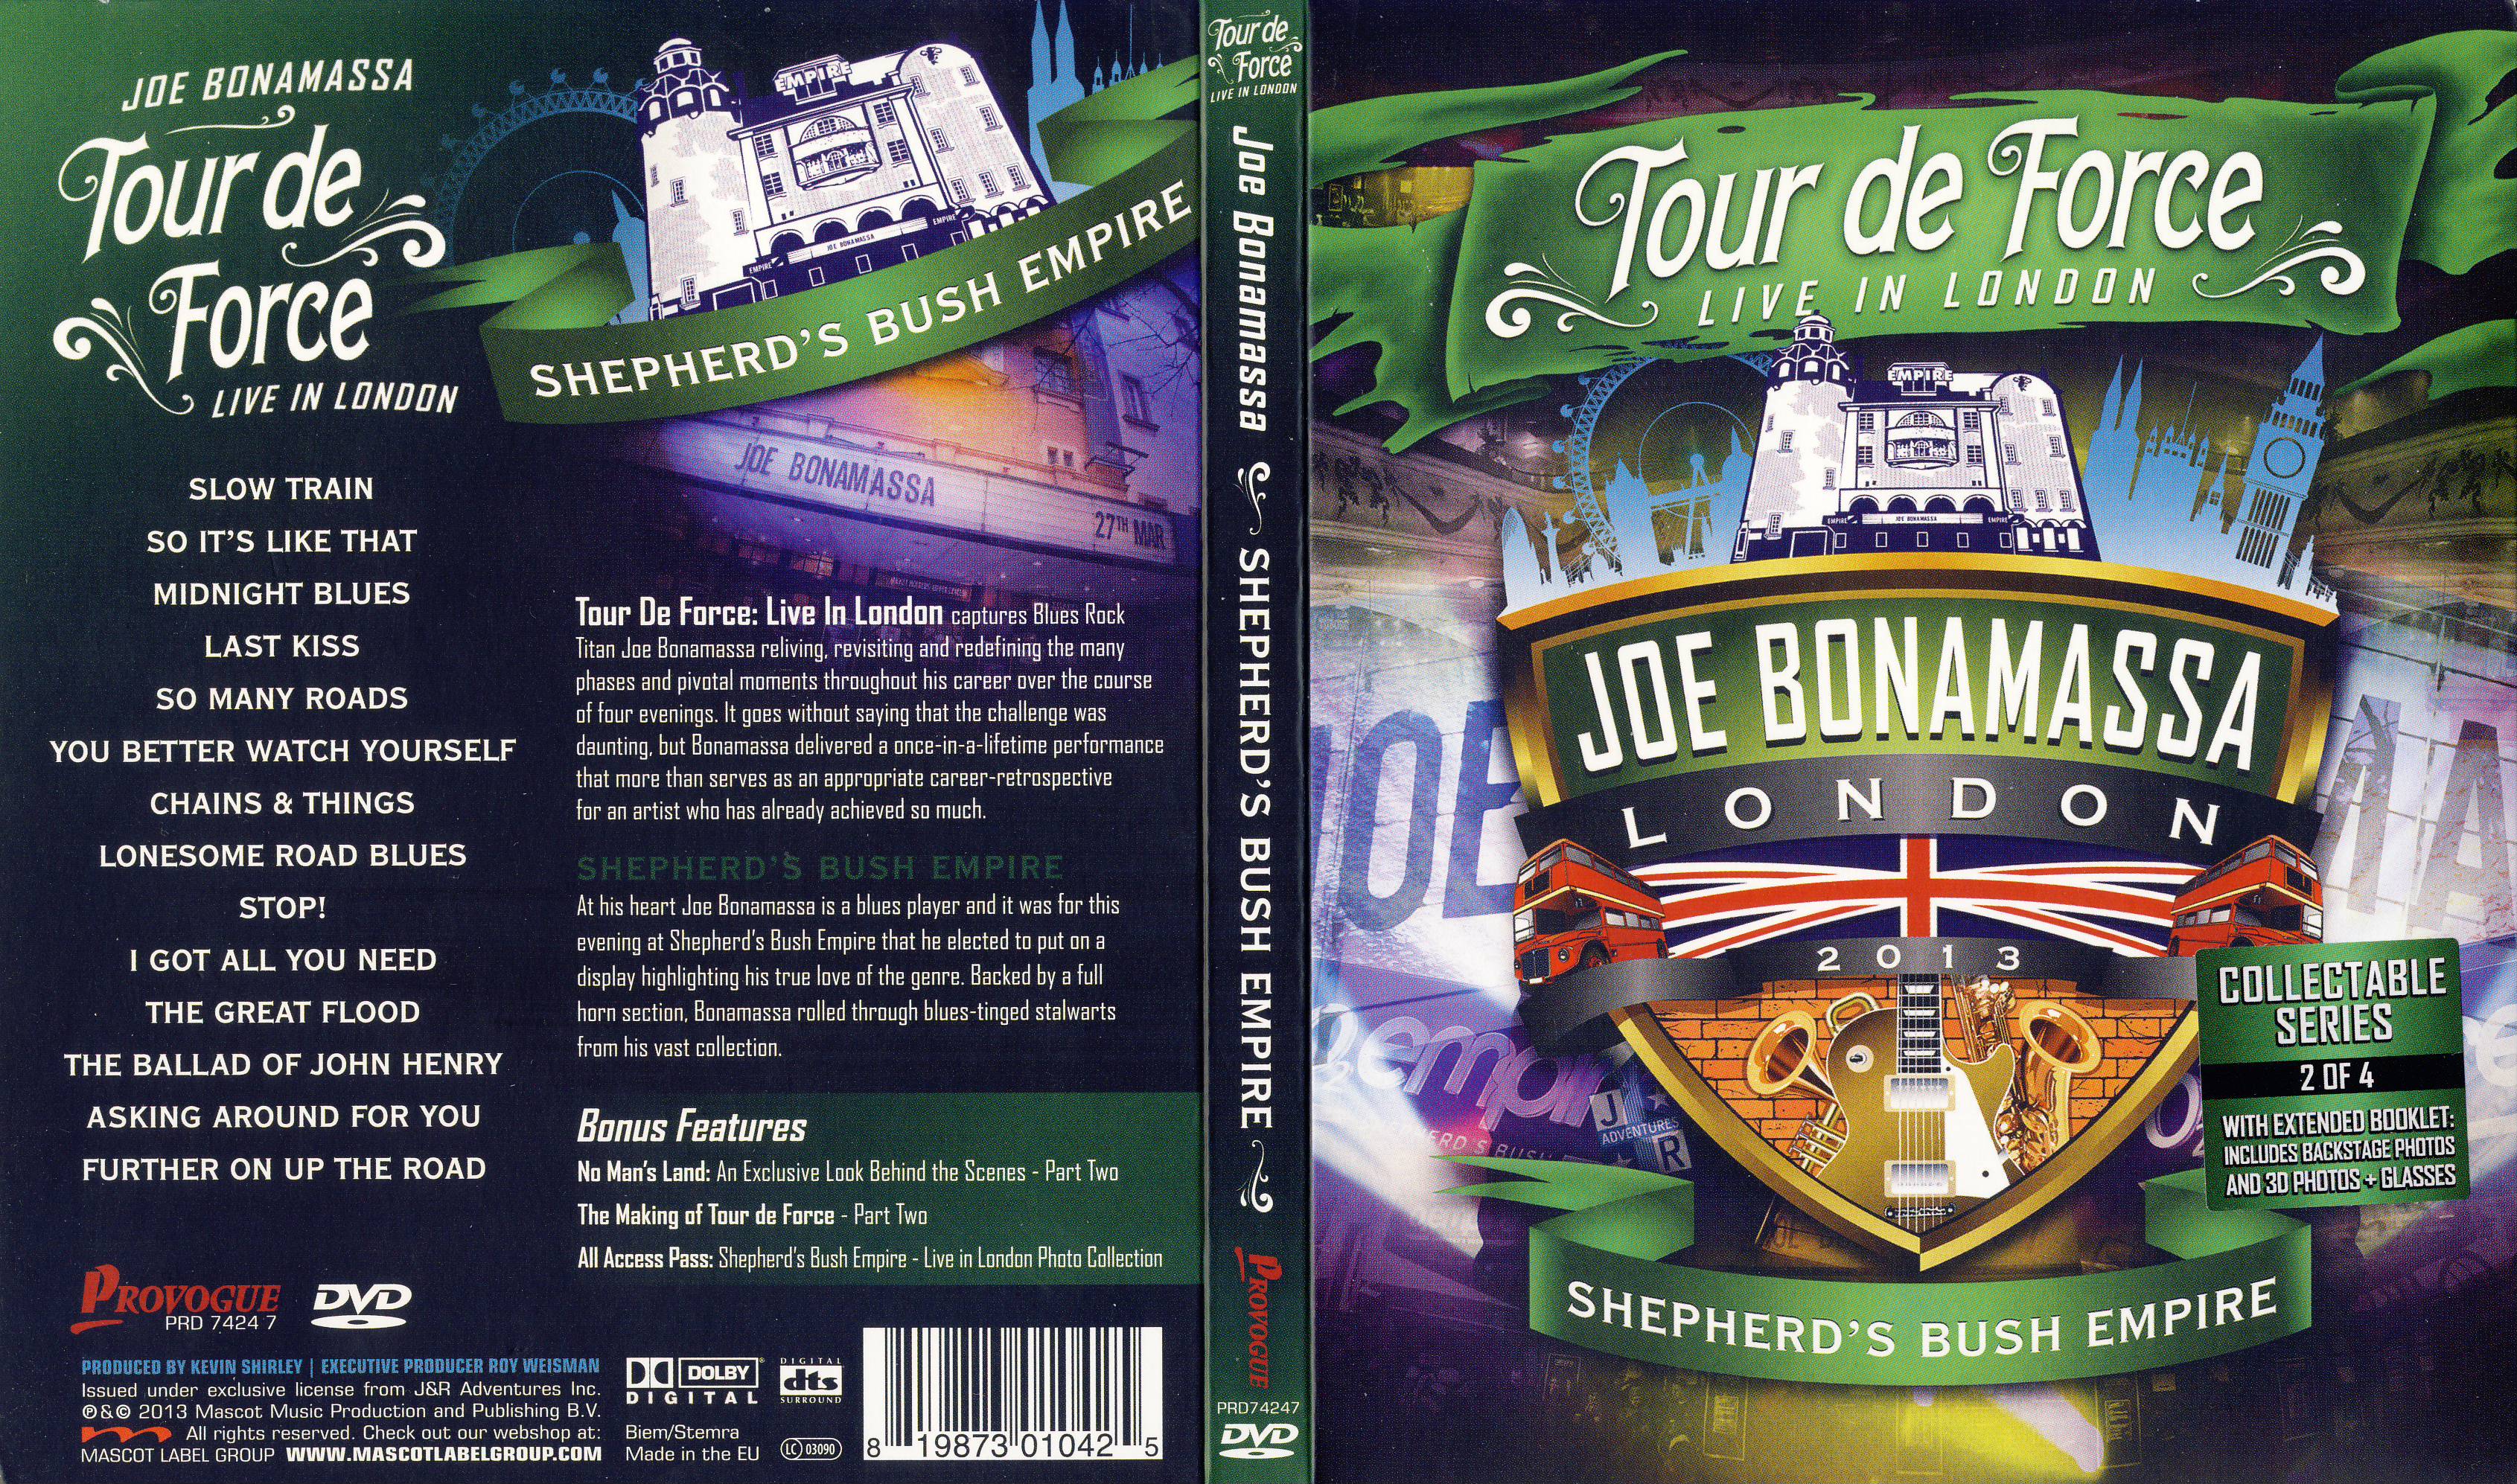 Jaquette DVD Joe Bonamassa Tour de Force london 2013 Shepherd